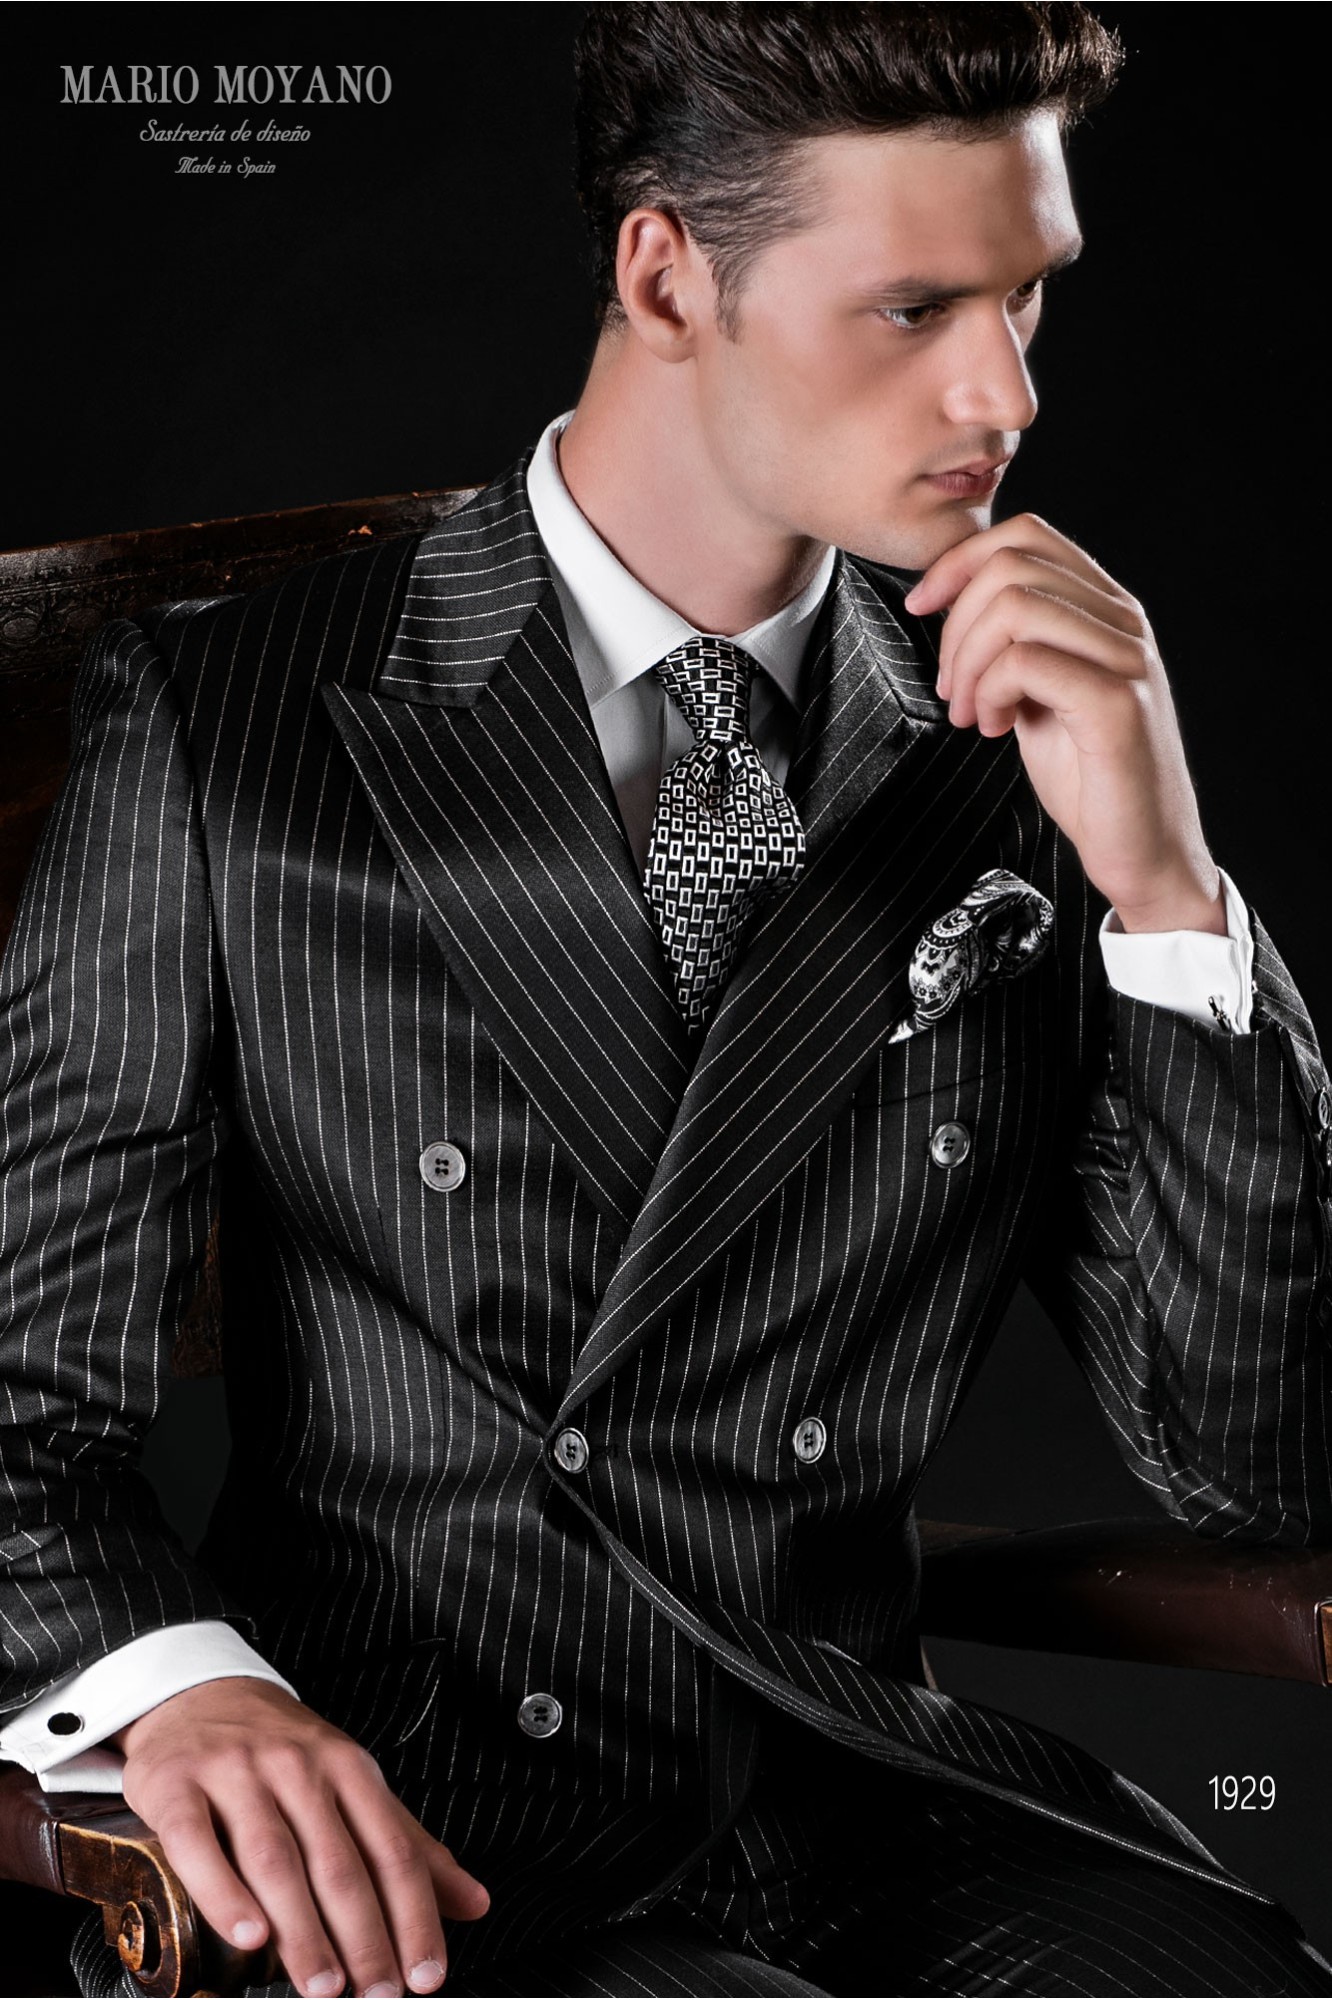 https://mariomoyano.com/5937-large_default/bespoke-double-breasted-black-pinstripe-suit-1929-mario-moyano.jpg